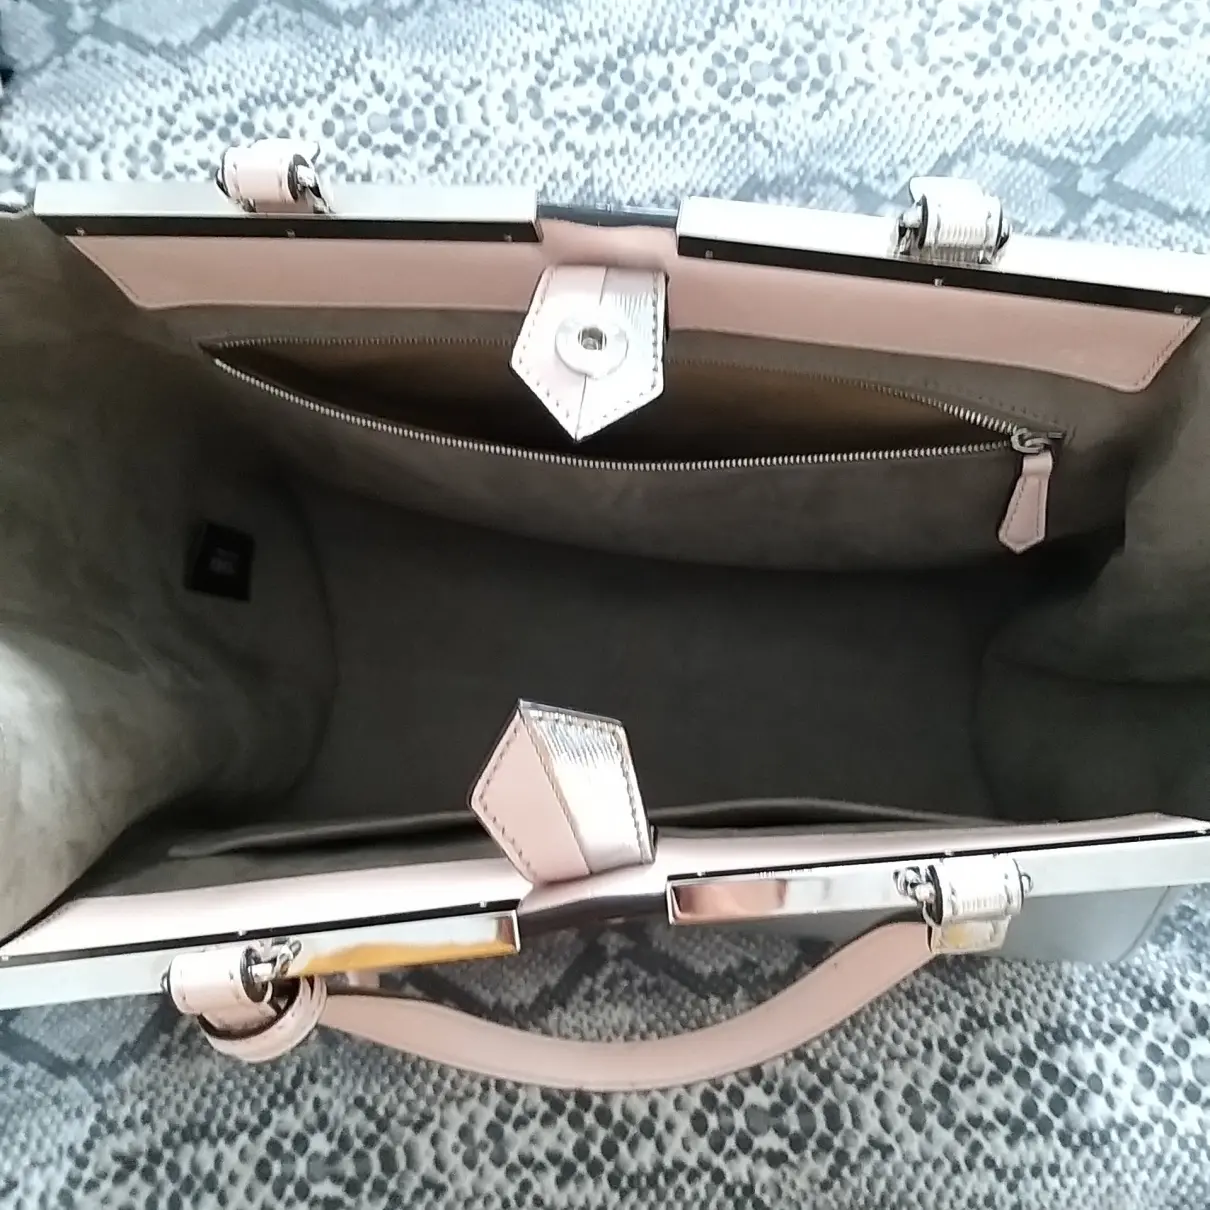 3Jours leather handbag Fendi